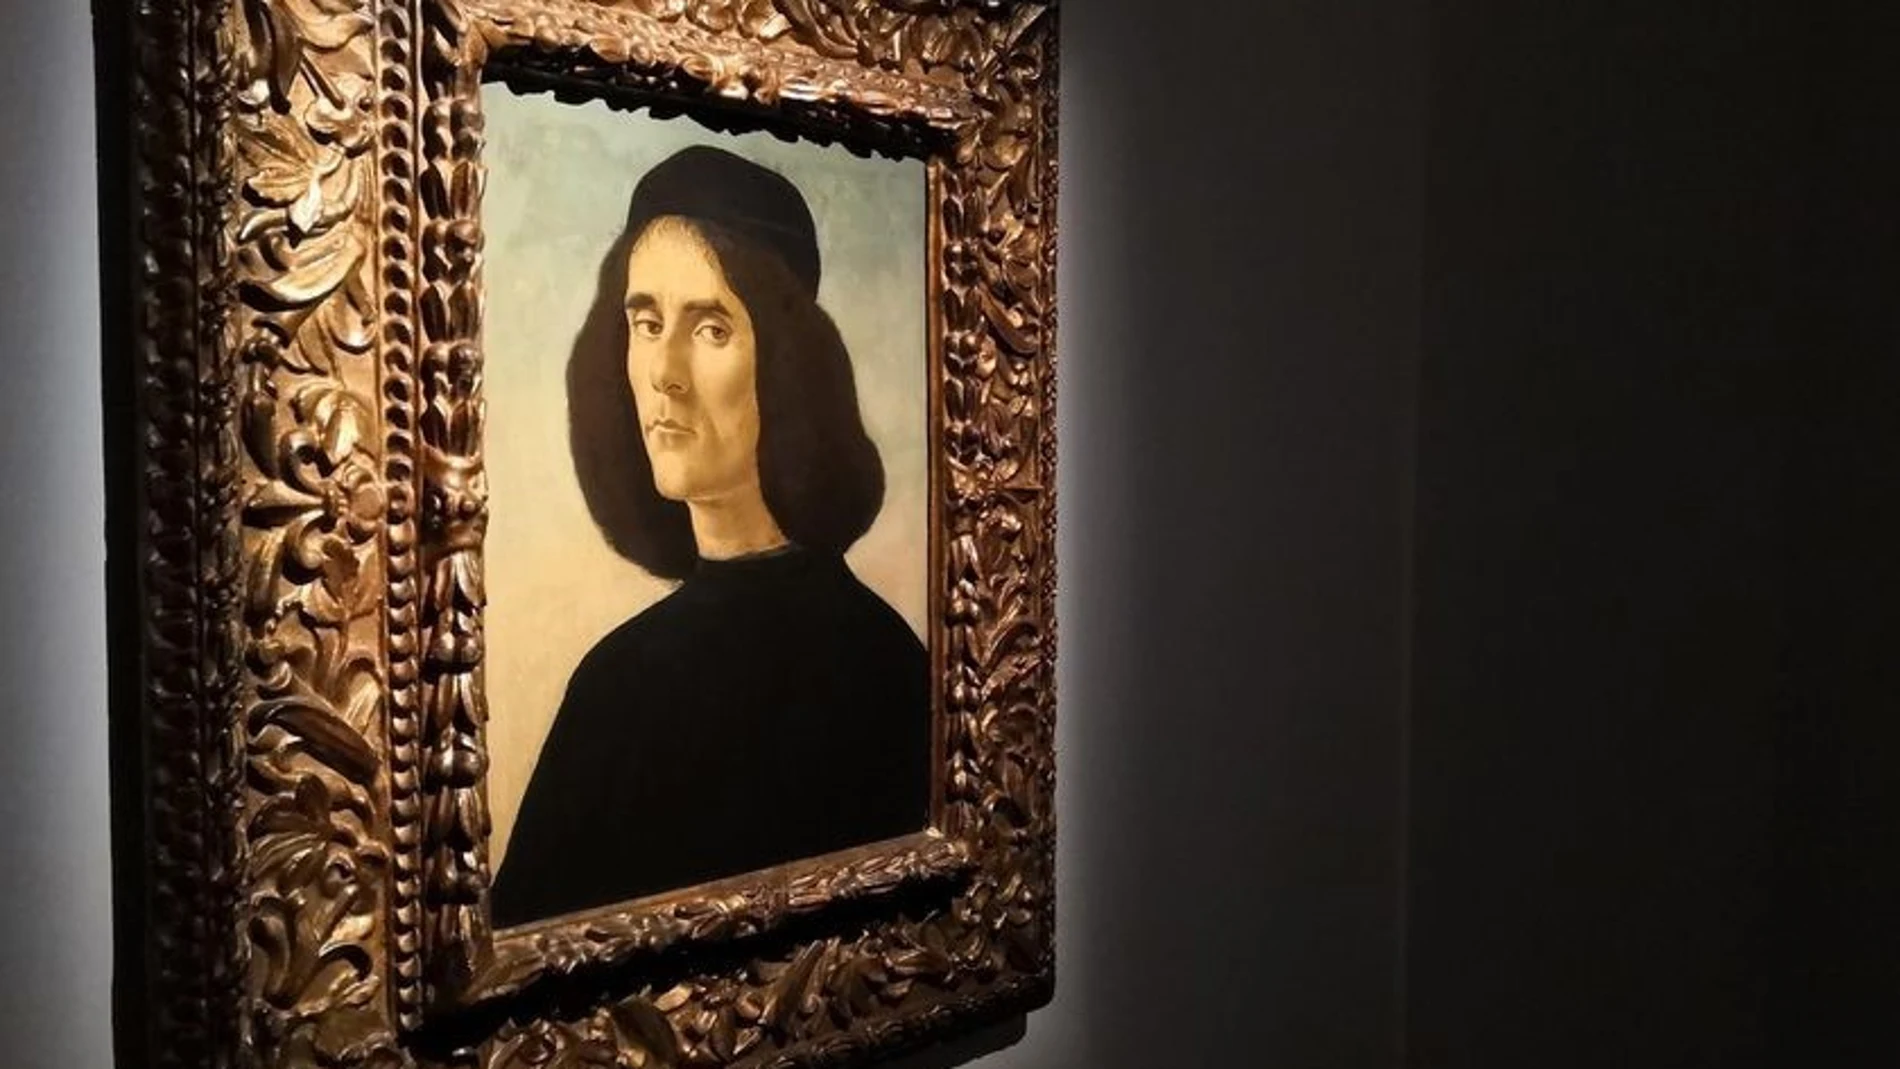 'Retrato de Michele Marullo Tarcaniota' de Sandro Botticelli